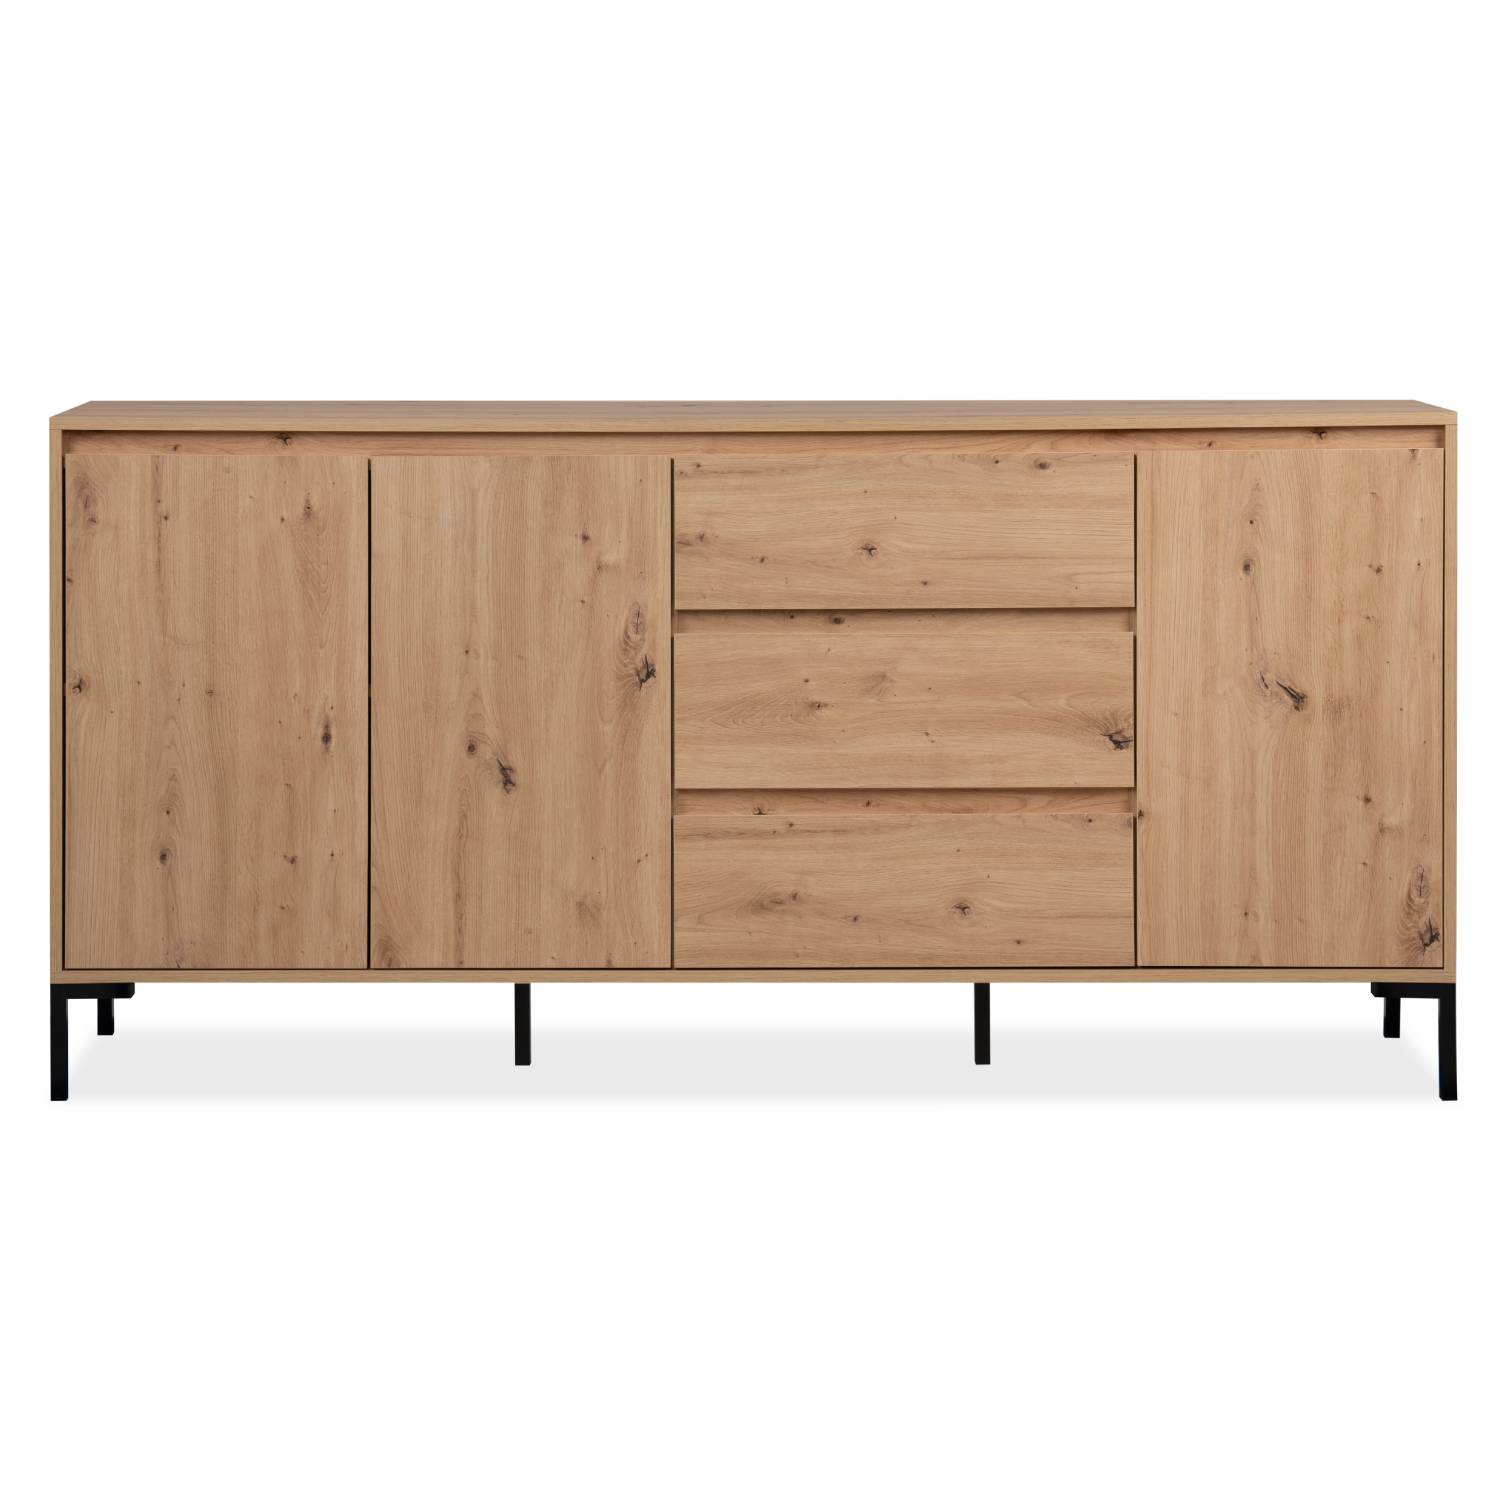 Sideboard Chest of Drawers 170 cm Wood Oak Cupboard Living Room Cabinet Industrial Look